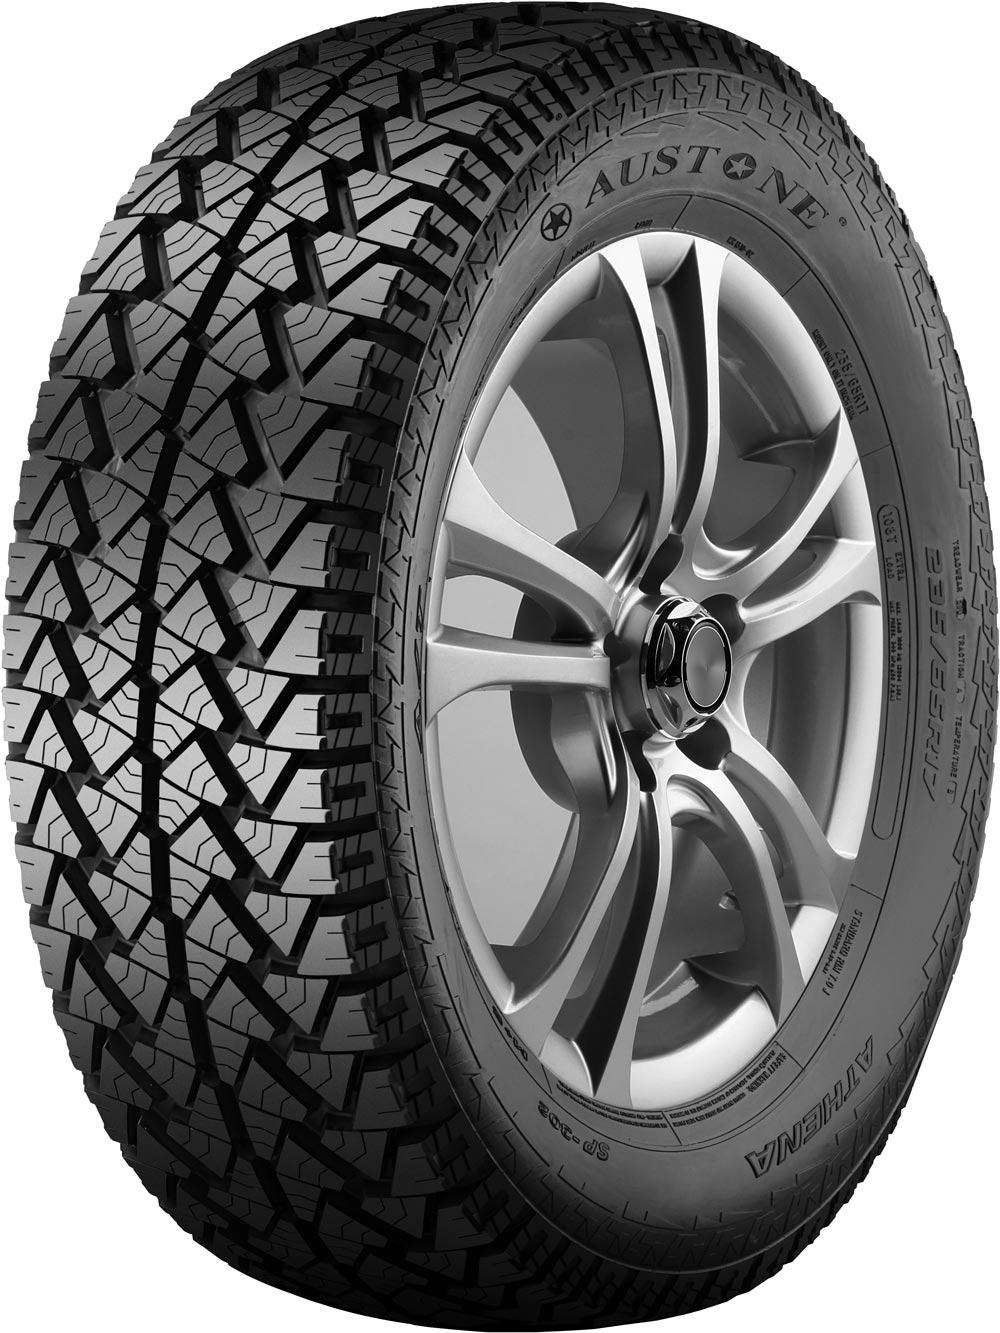 Джипови гуми AUSTONE SP302 XL 235/75 R15 109S